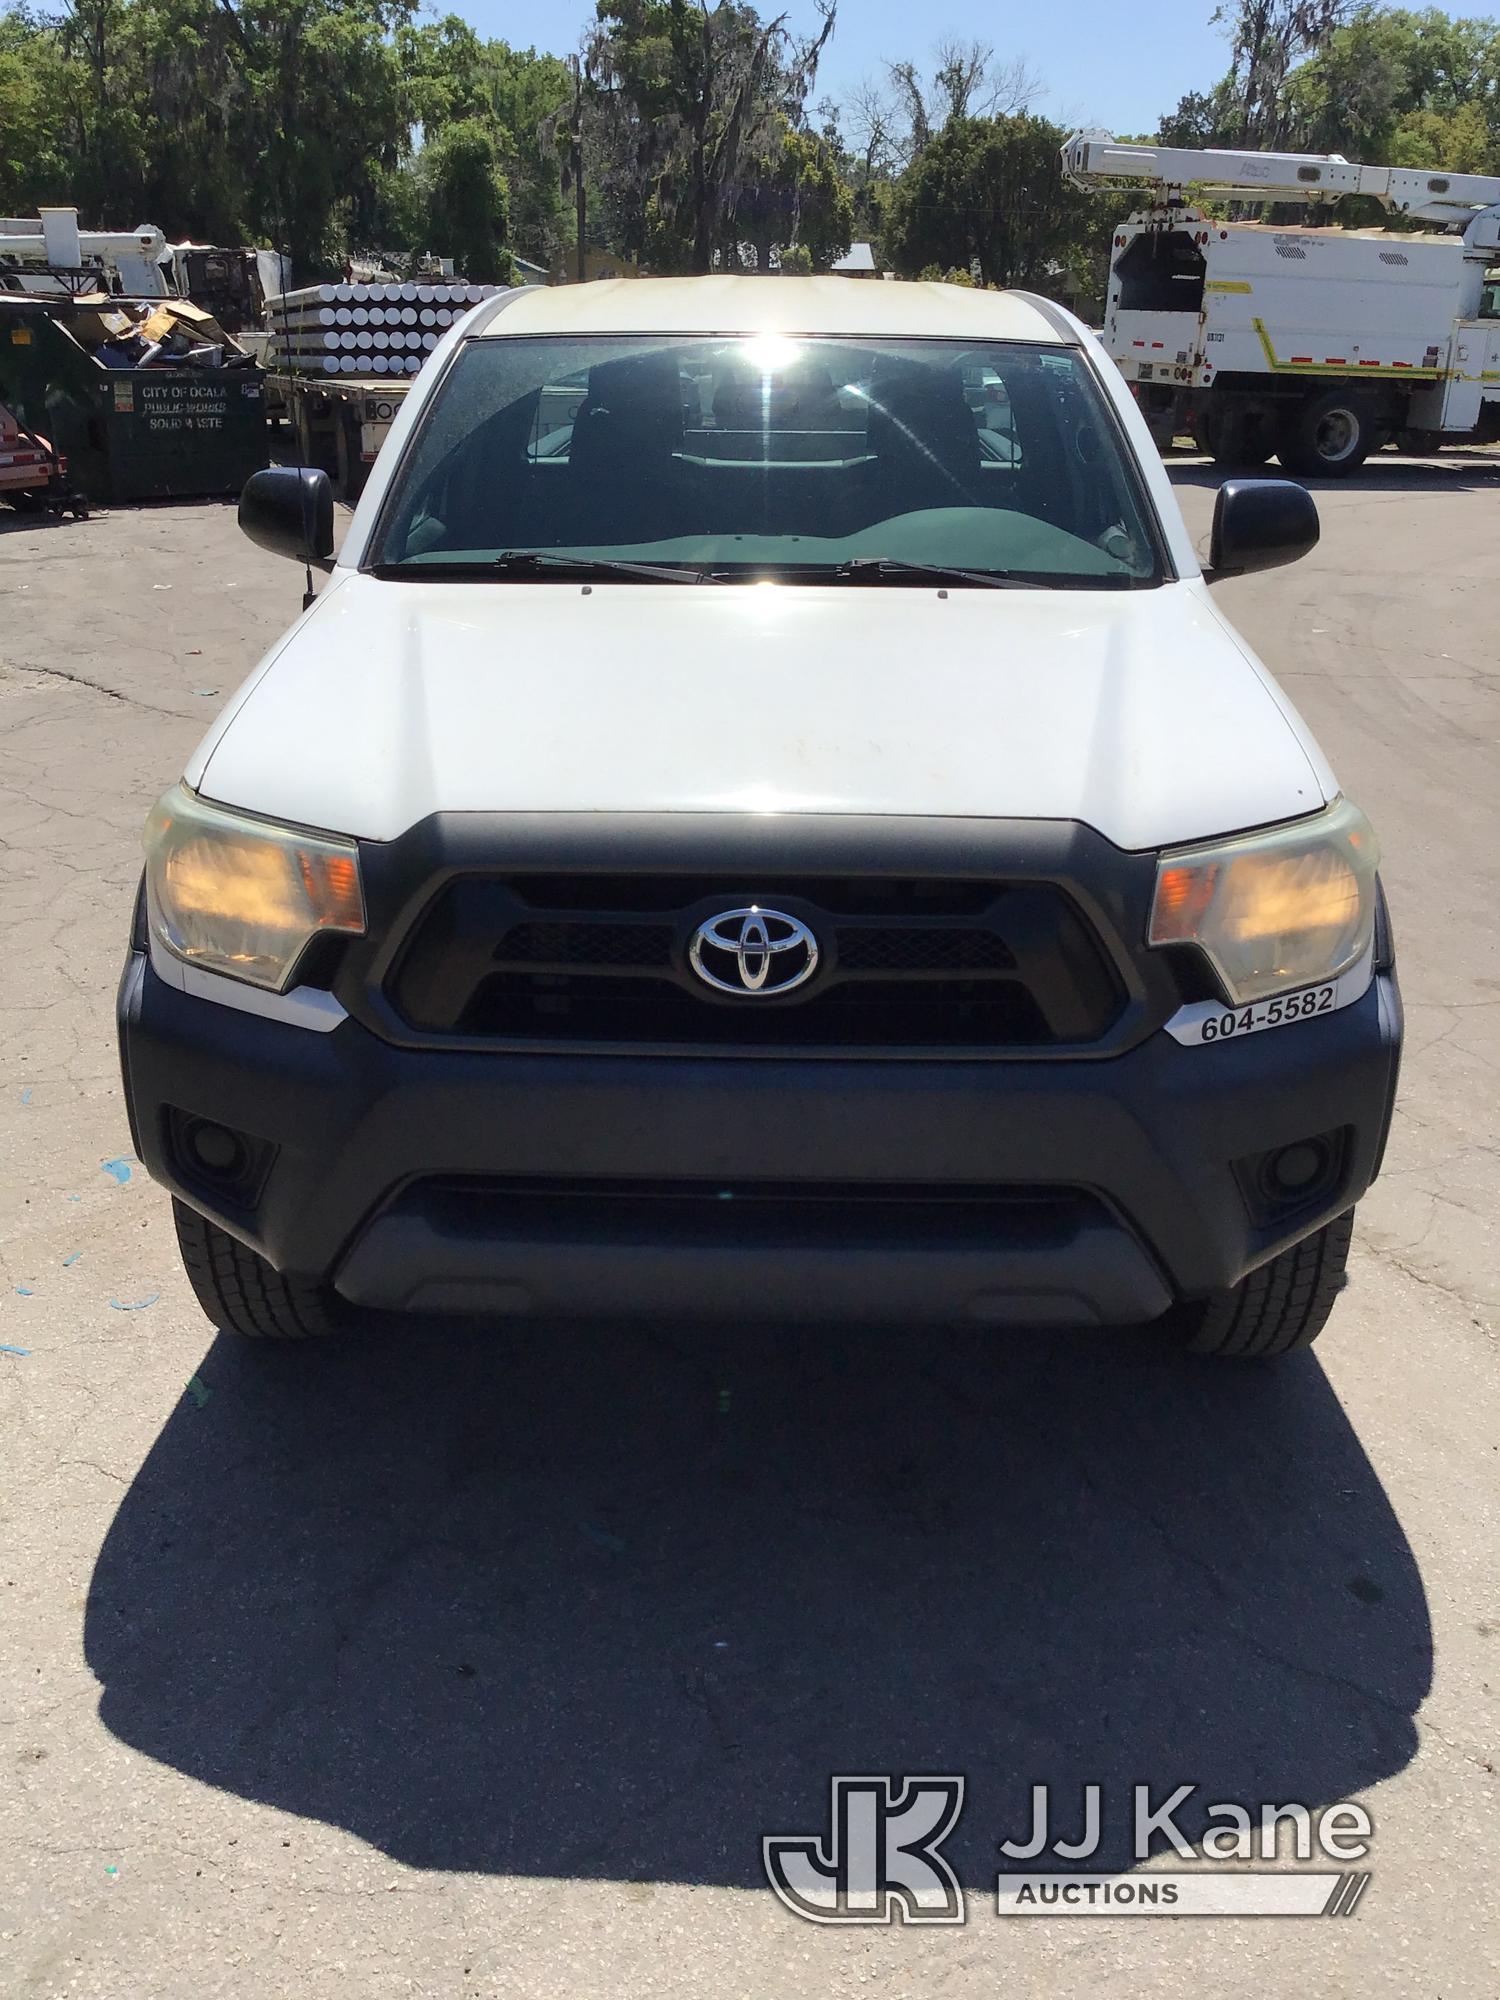 (Ocala, FL) 2015 Toyota Tacoma 4x4 Extended-Cab Pickup Truck Runs & Moves) (Engine noise